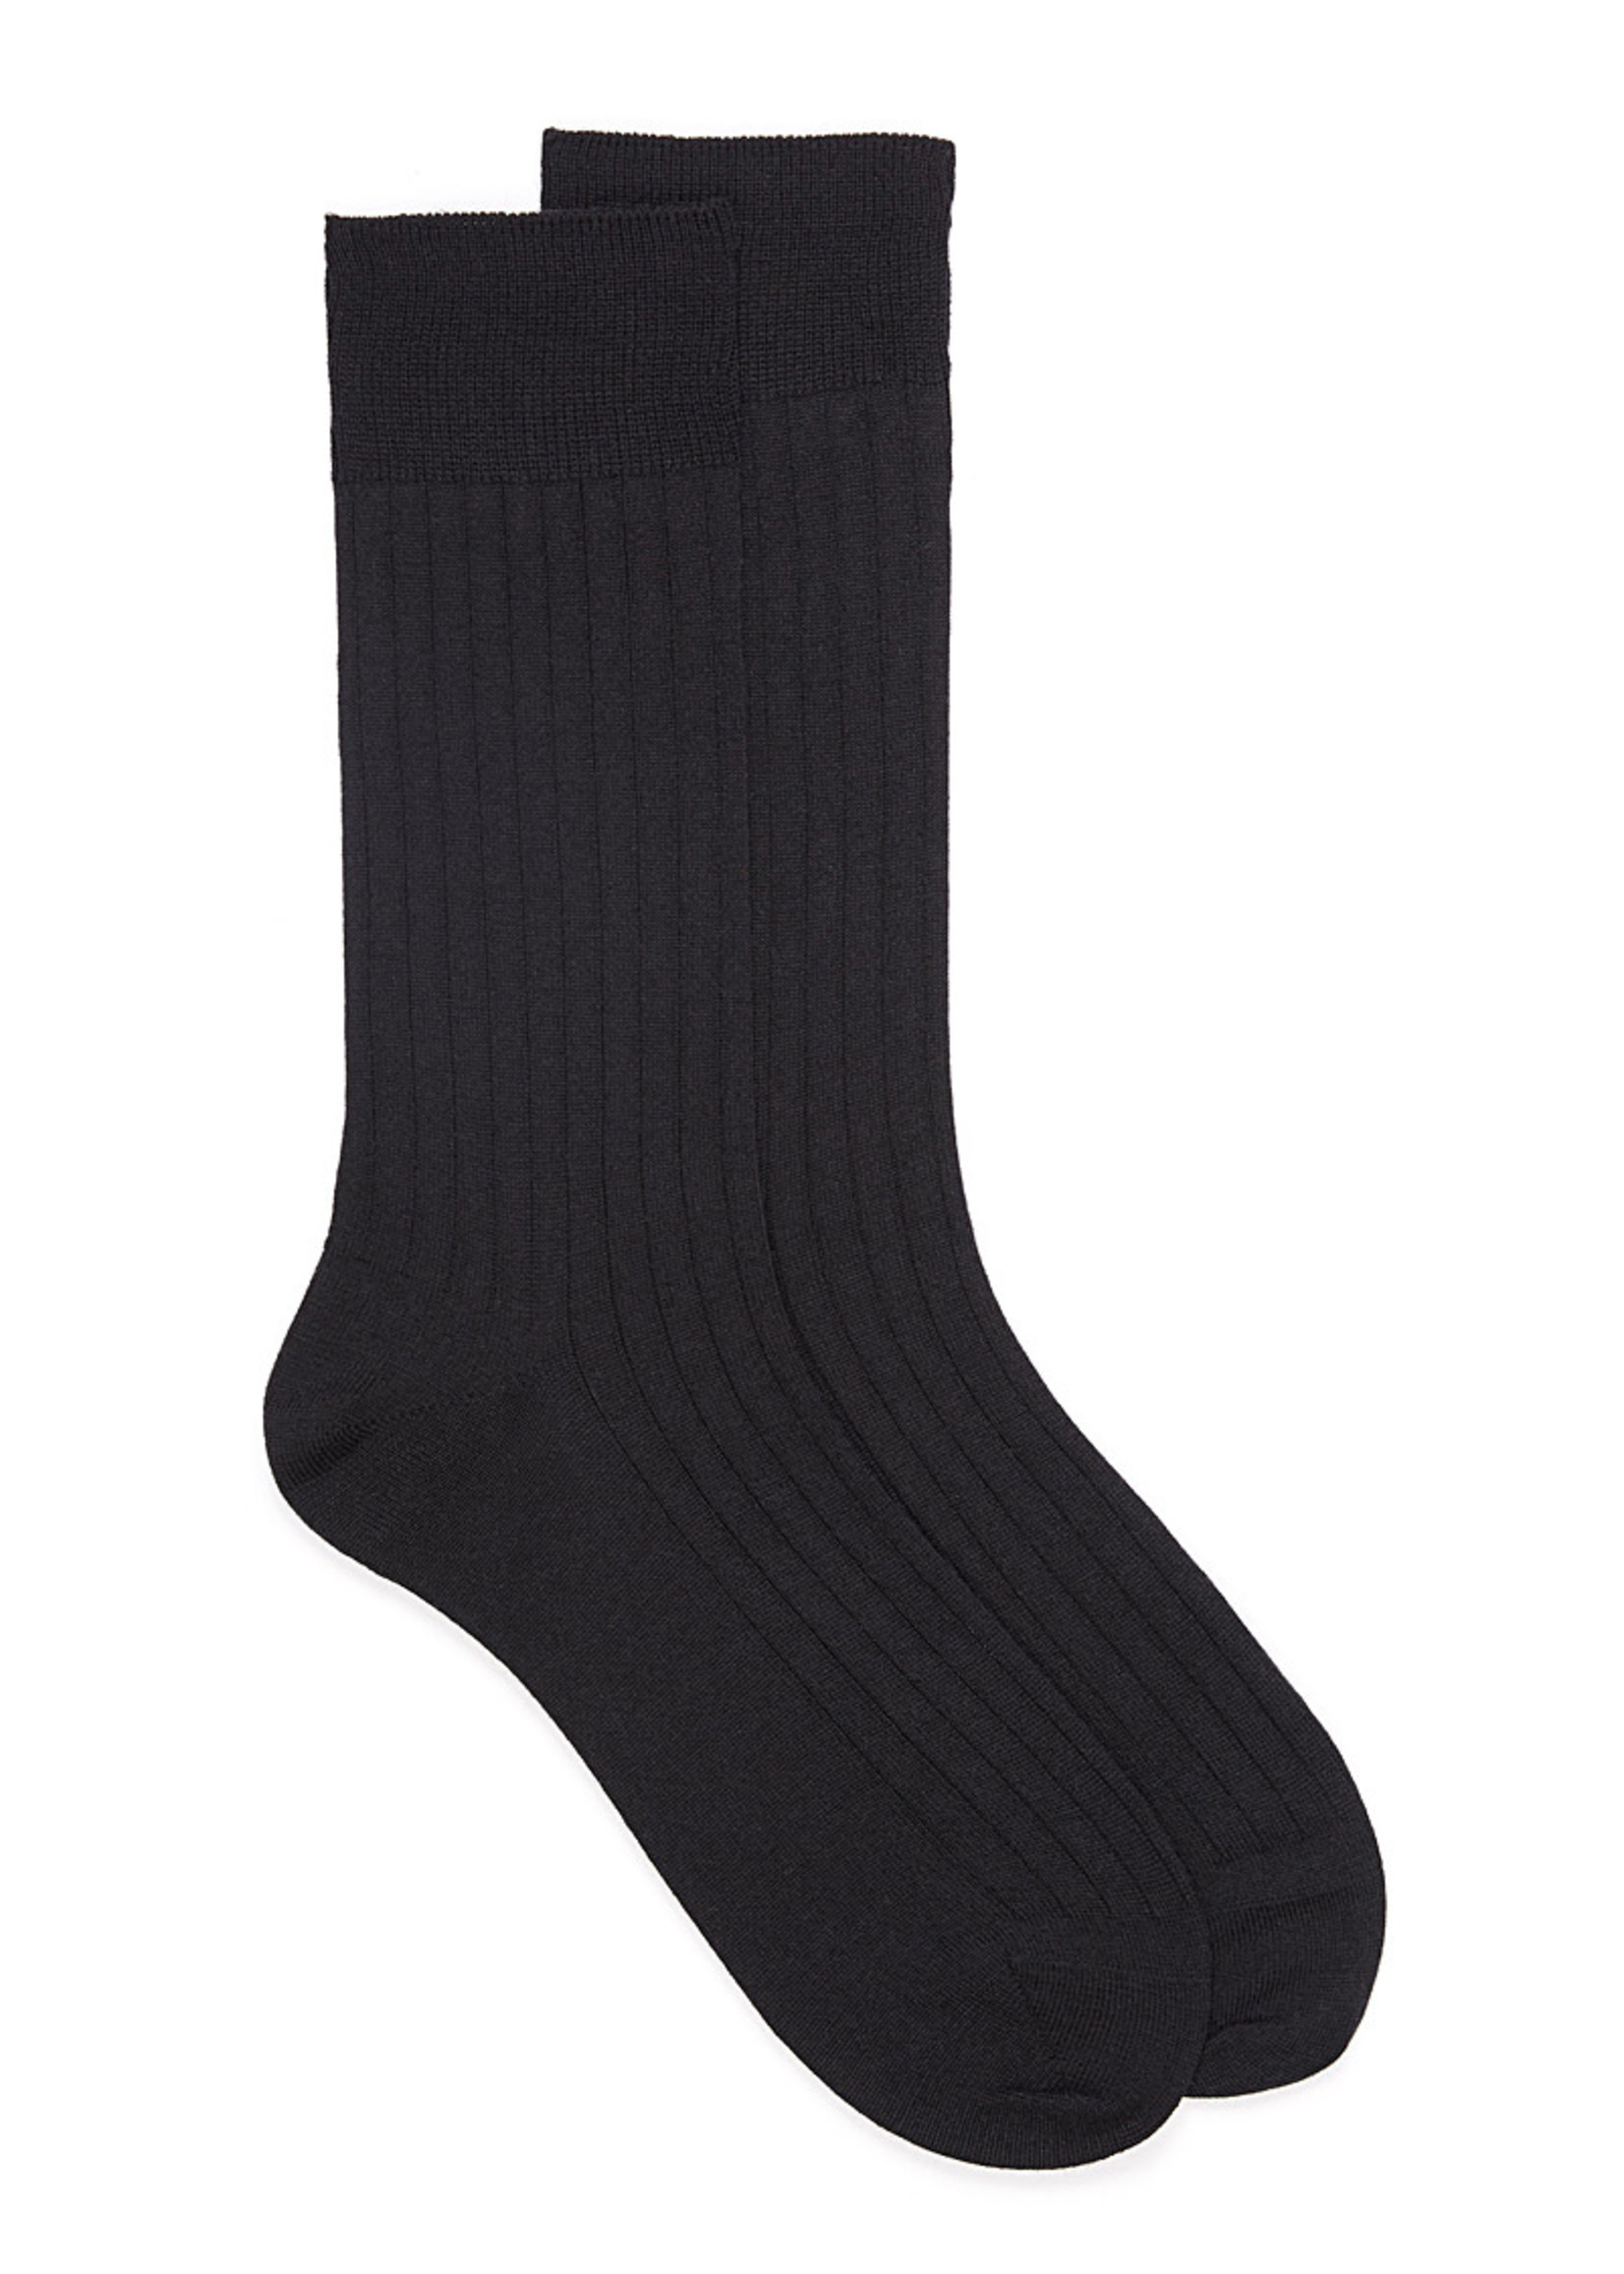 MCGREGOR Men's classic merino wool dress socks